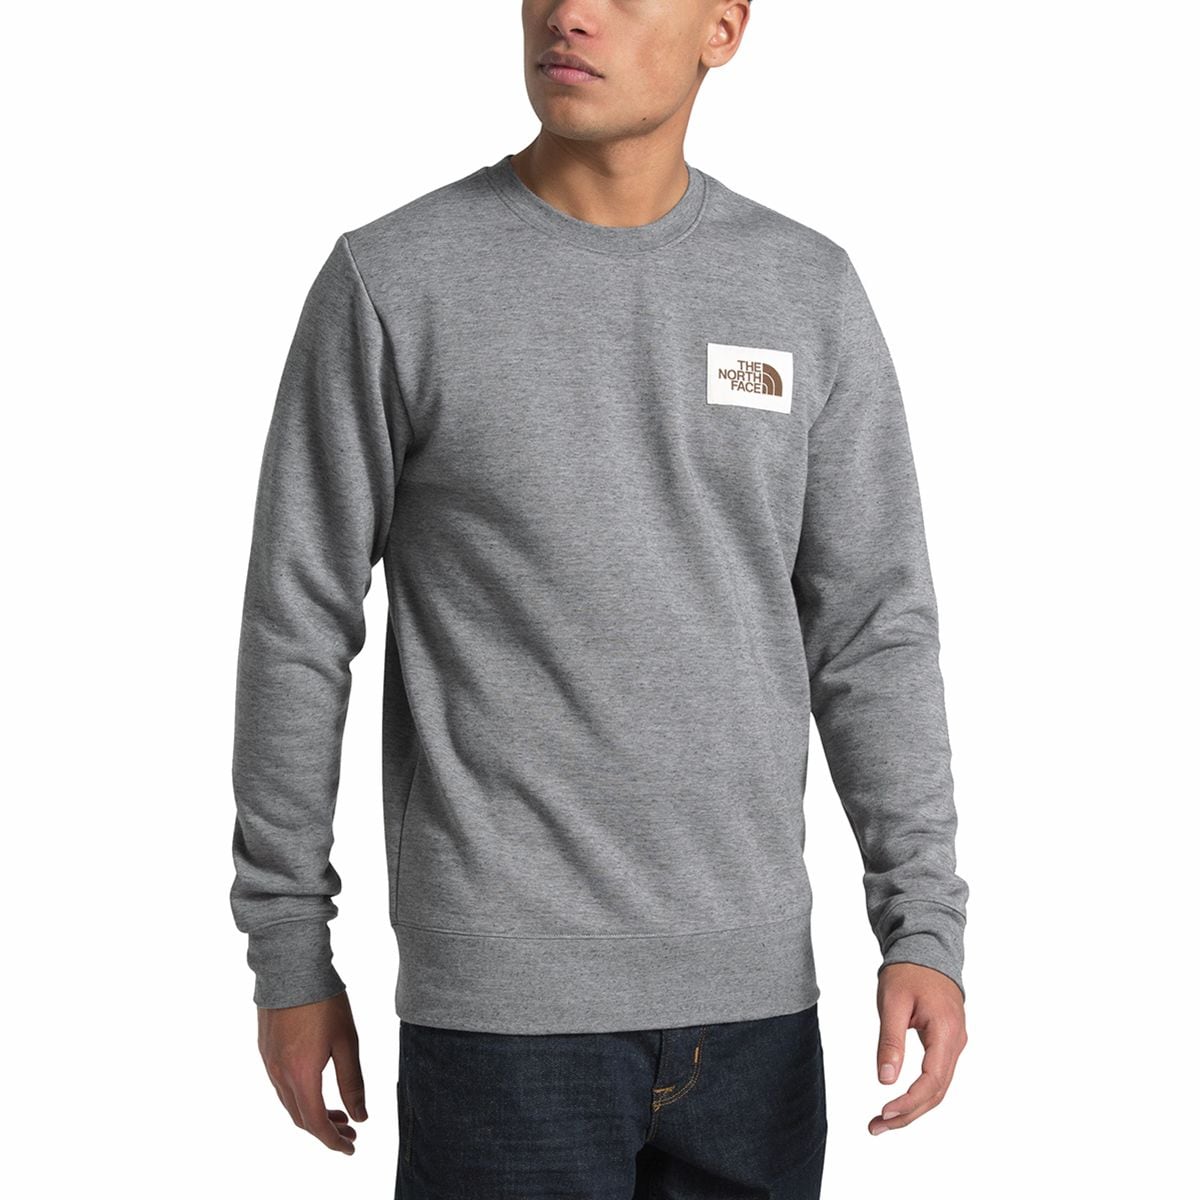 The North Face Heritage Crew Sweatshirt - Men's - Clothing